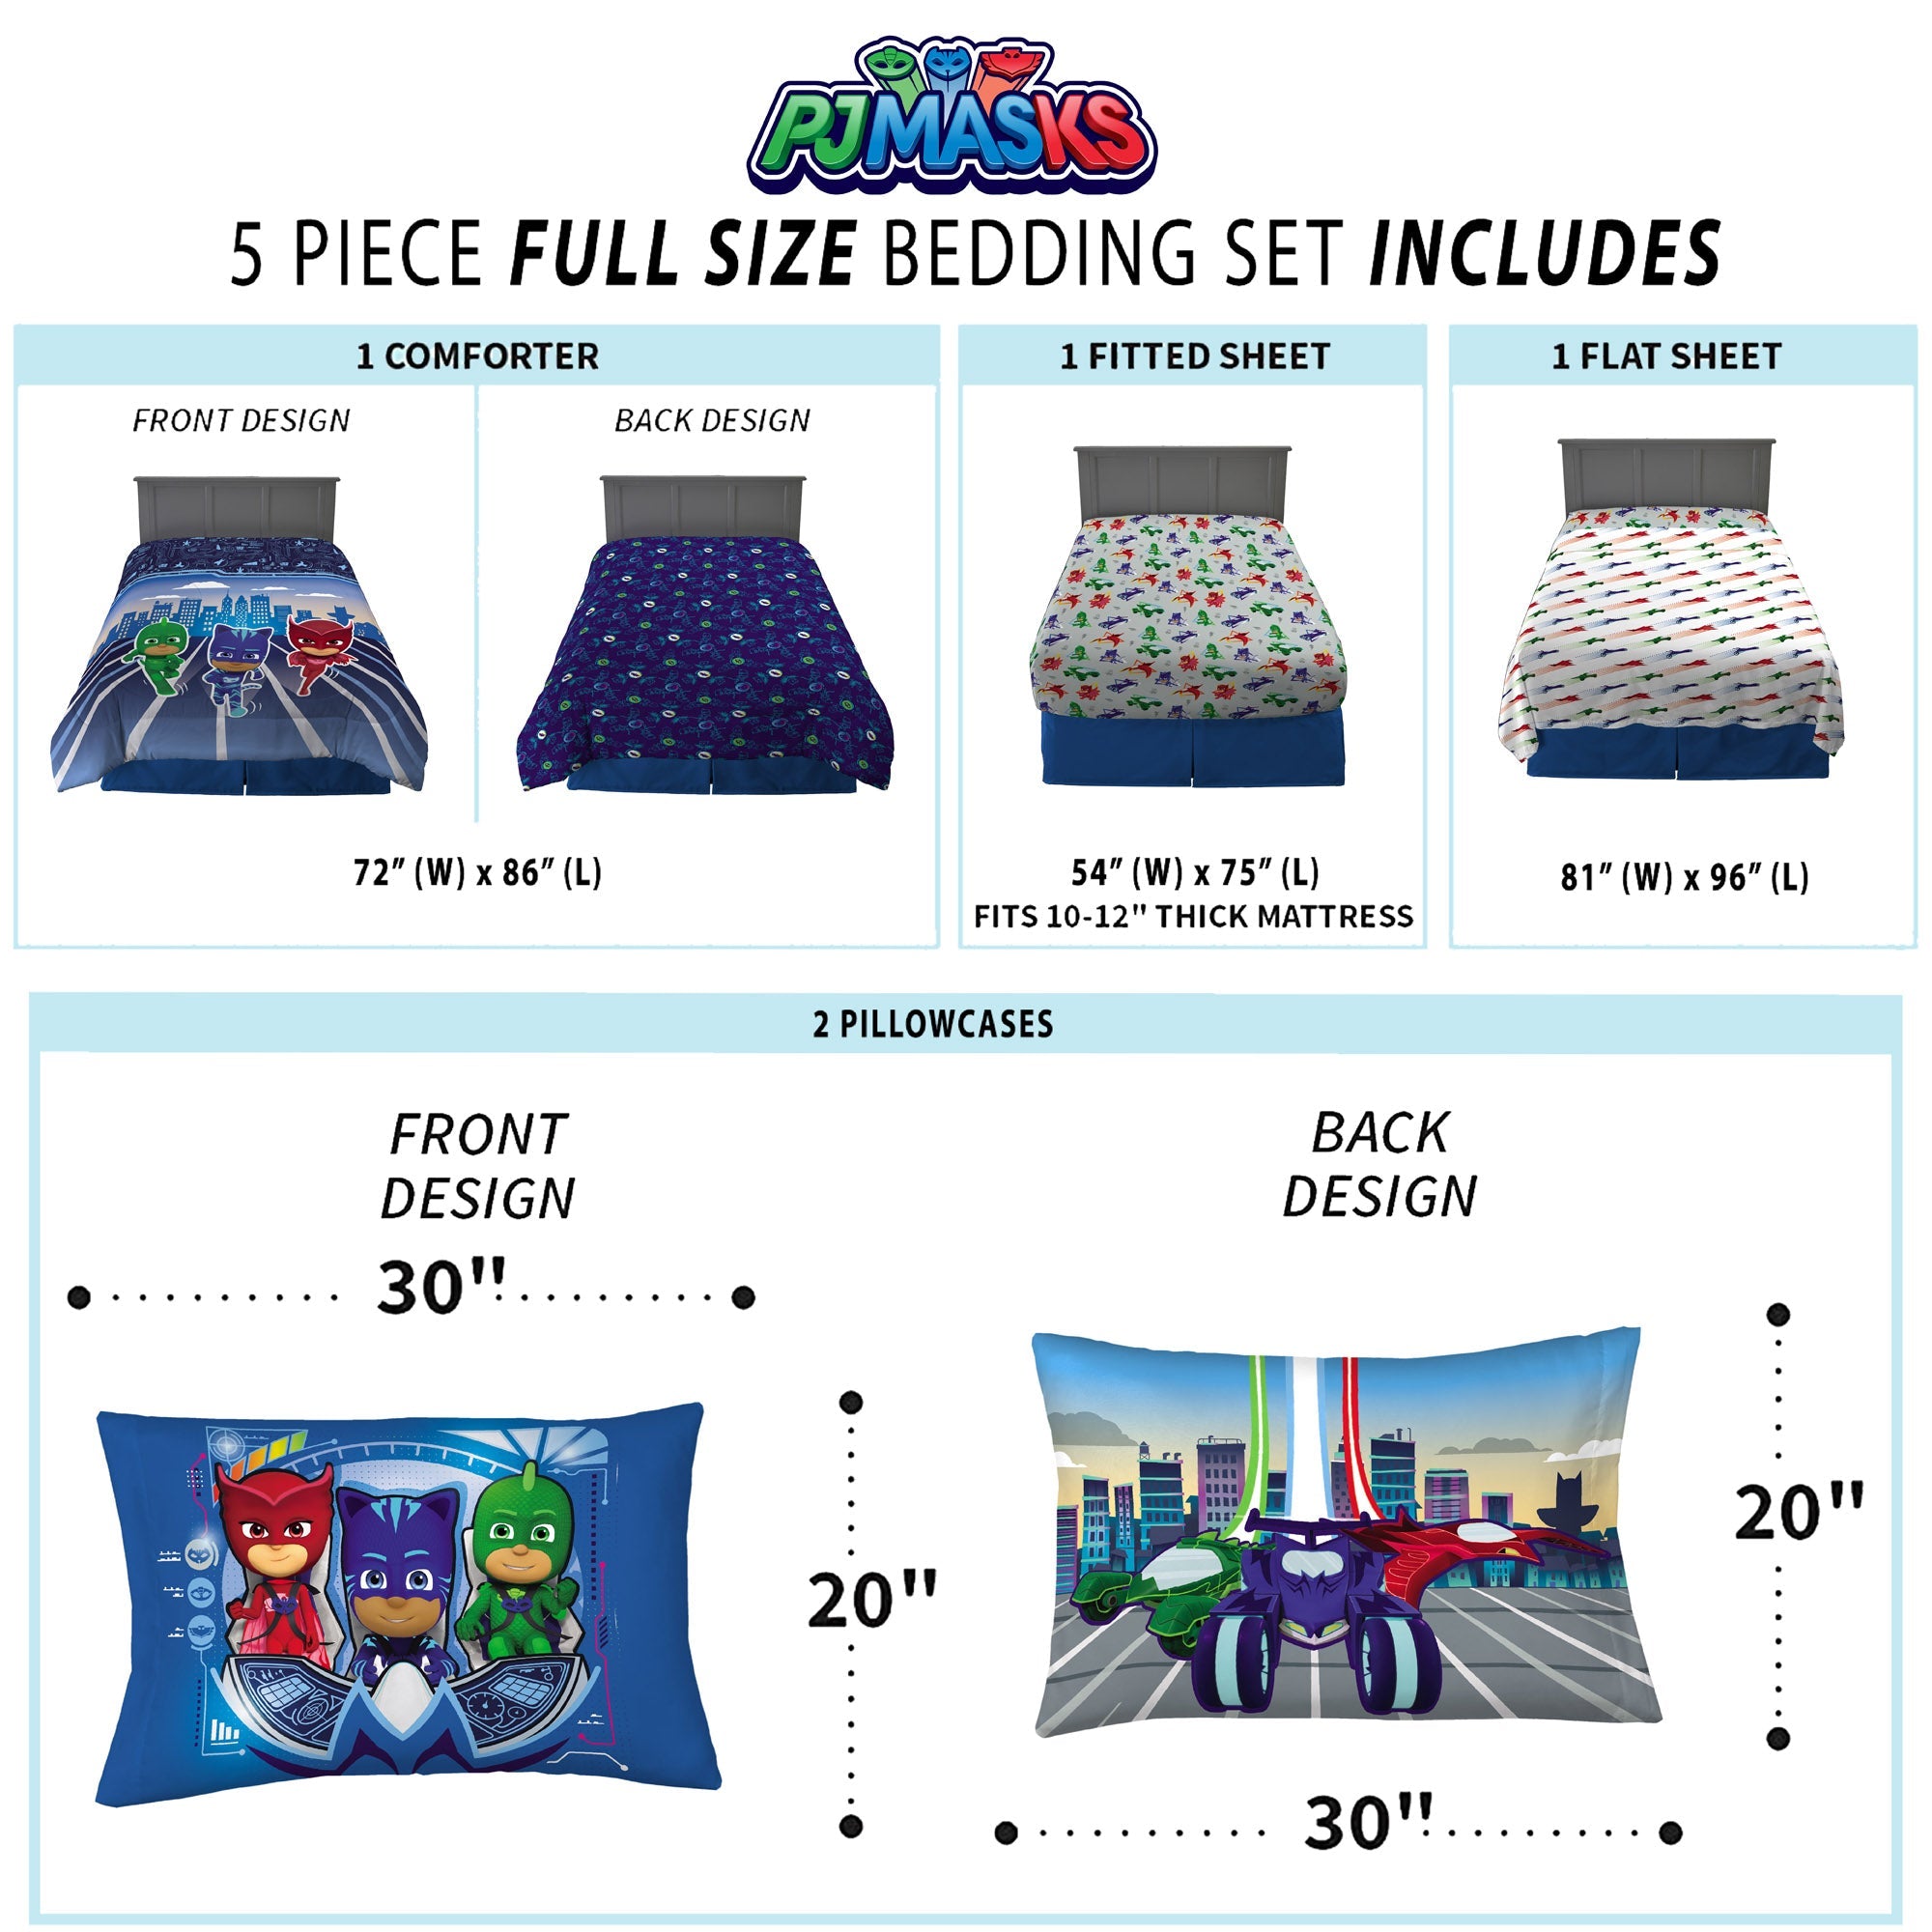 PJ Masks Kids Full Bed in a Bag, Comforter and Sheets, Blue, Hasbro